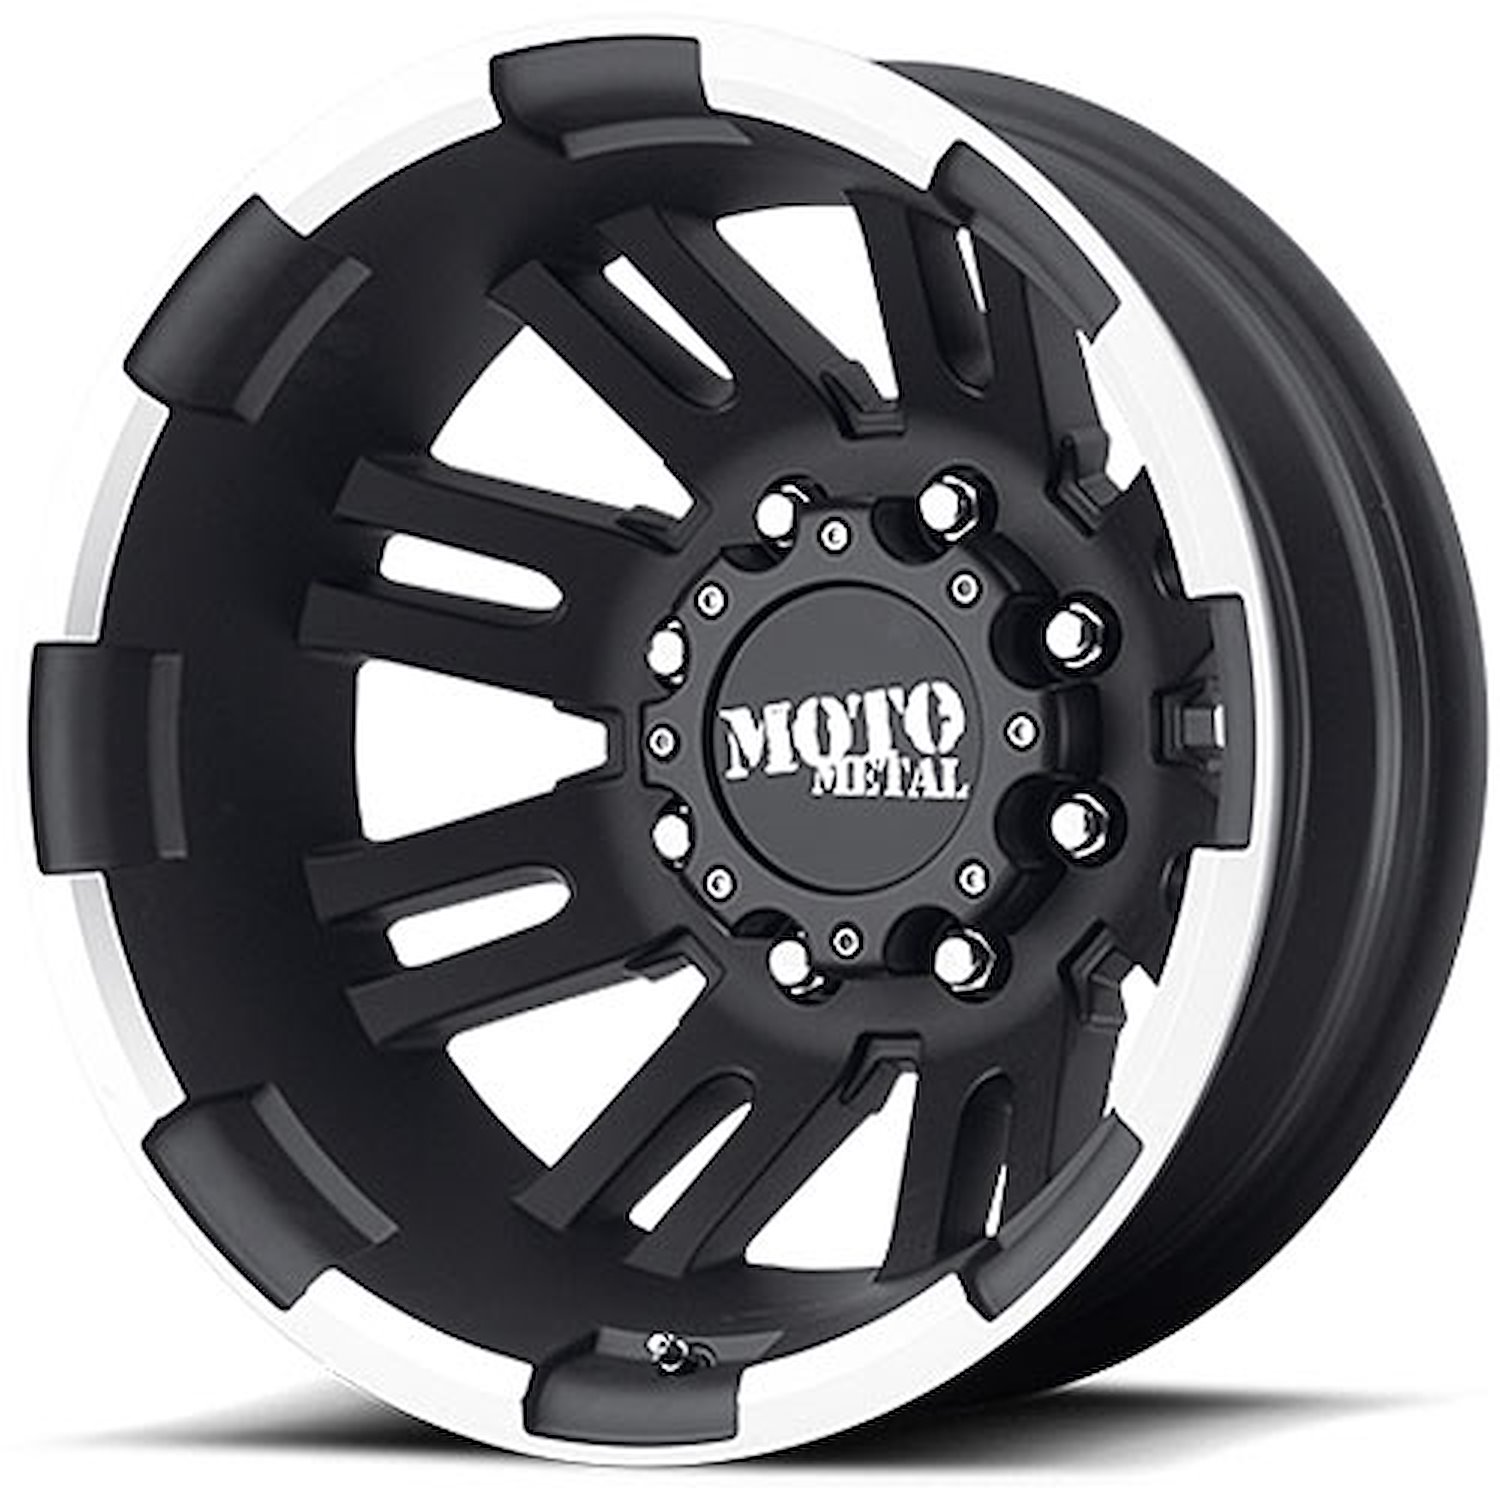 MO963 Series Dually Rear Wheel Size: 16" x 6"